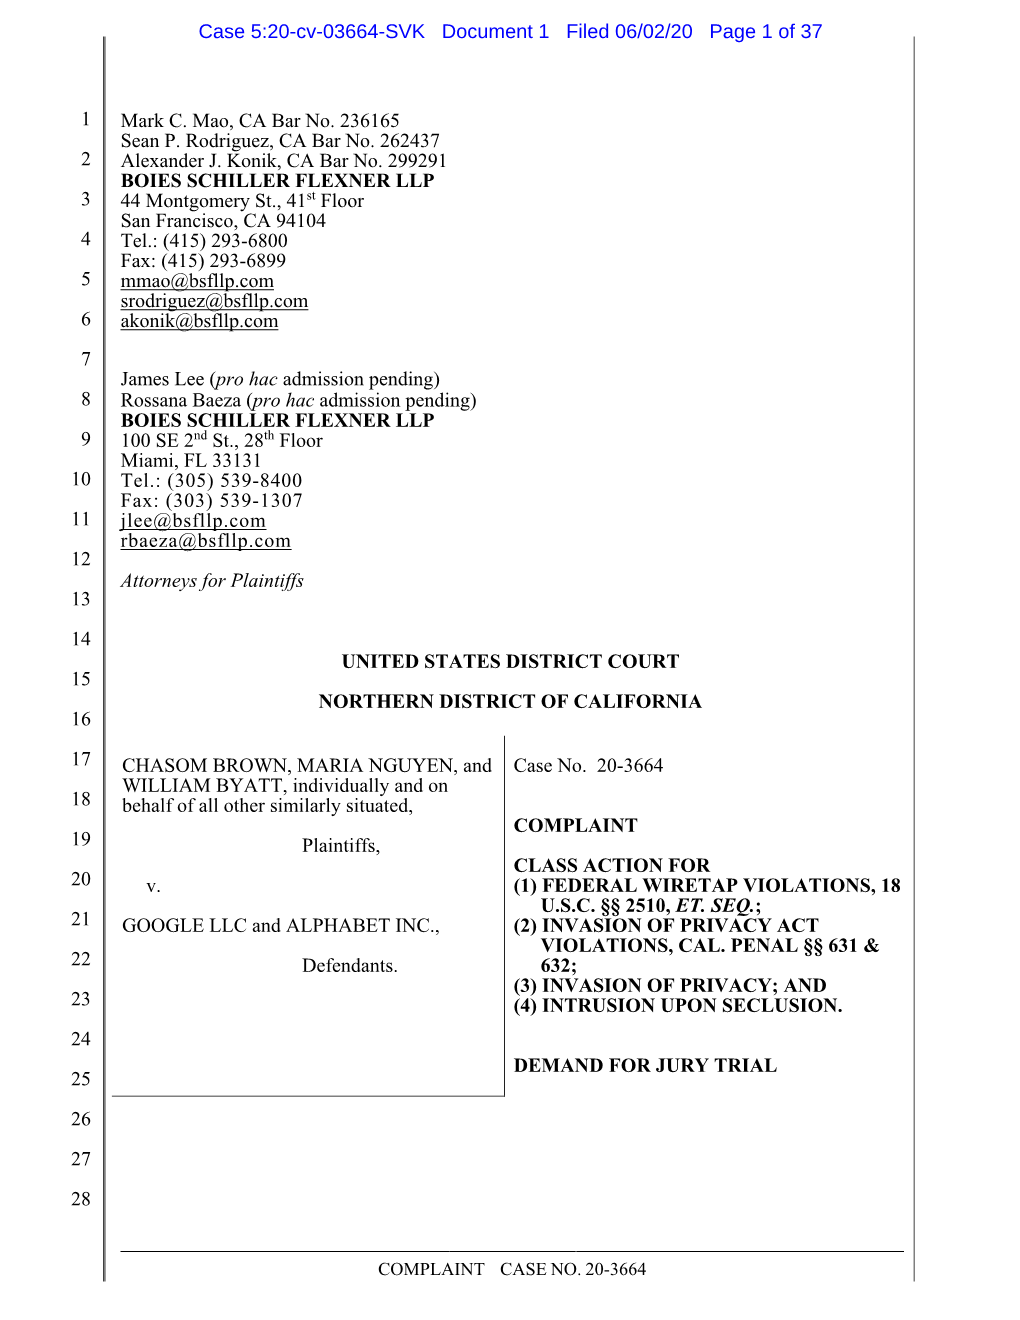 Brown Et Al V Google LLC Et Al, U.S. District Court